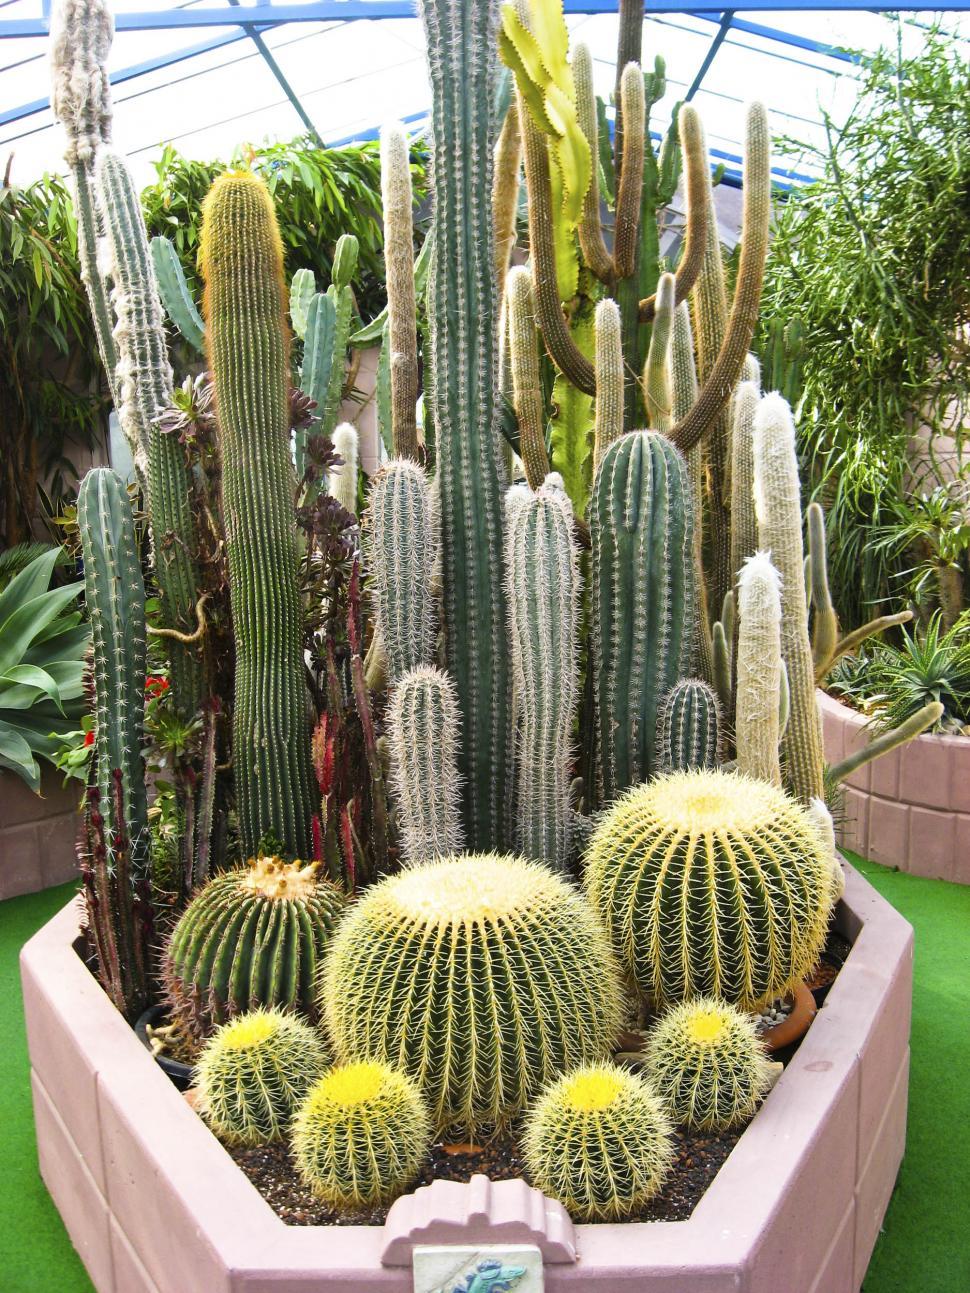 Download Free Stock Photo of Cactus planter 